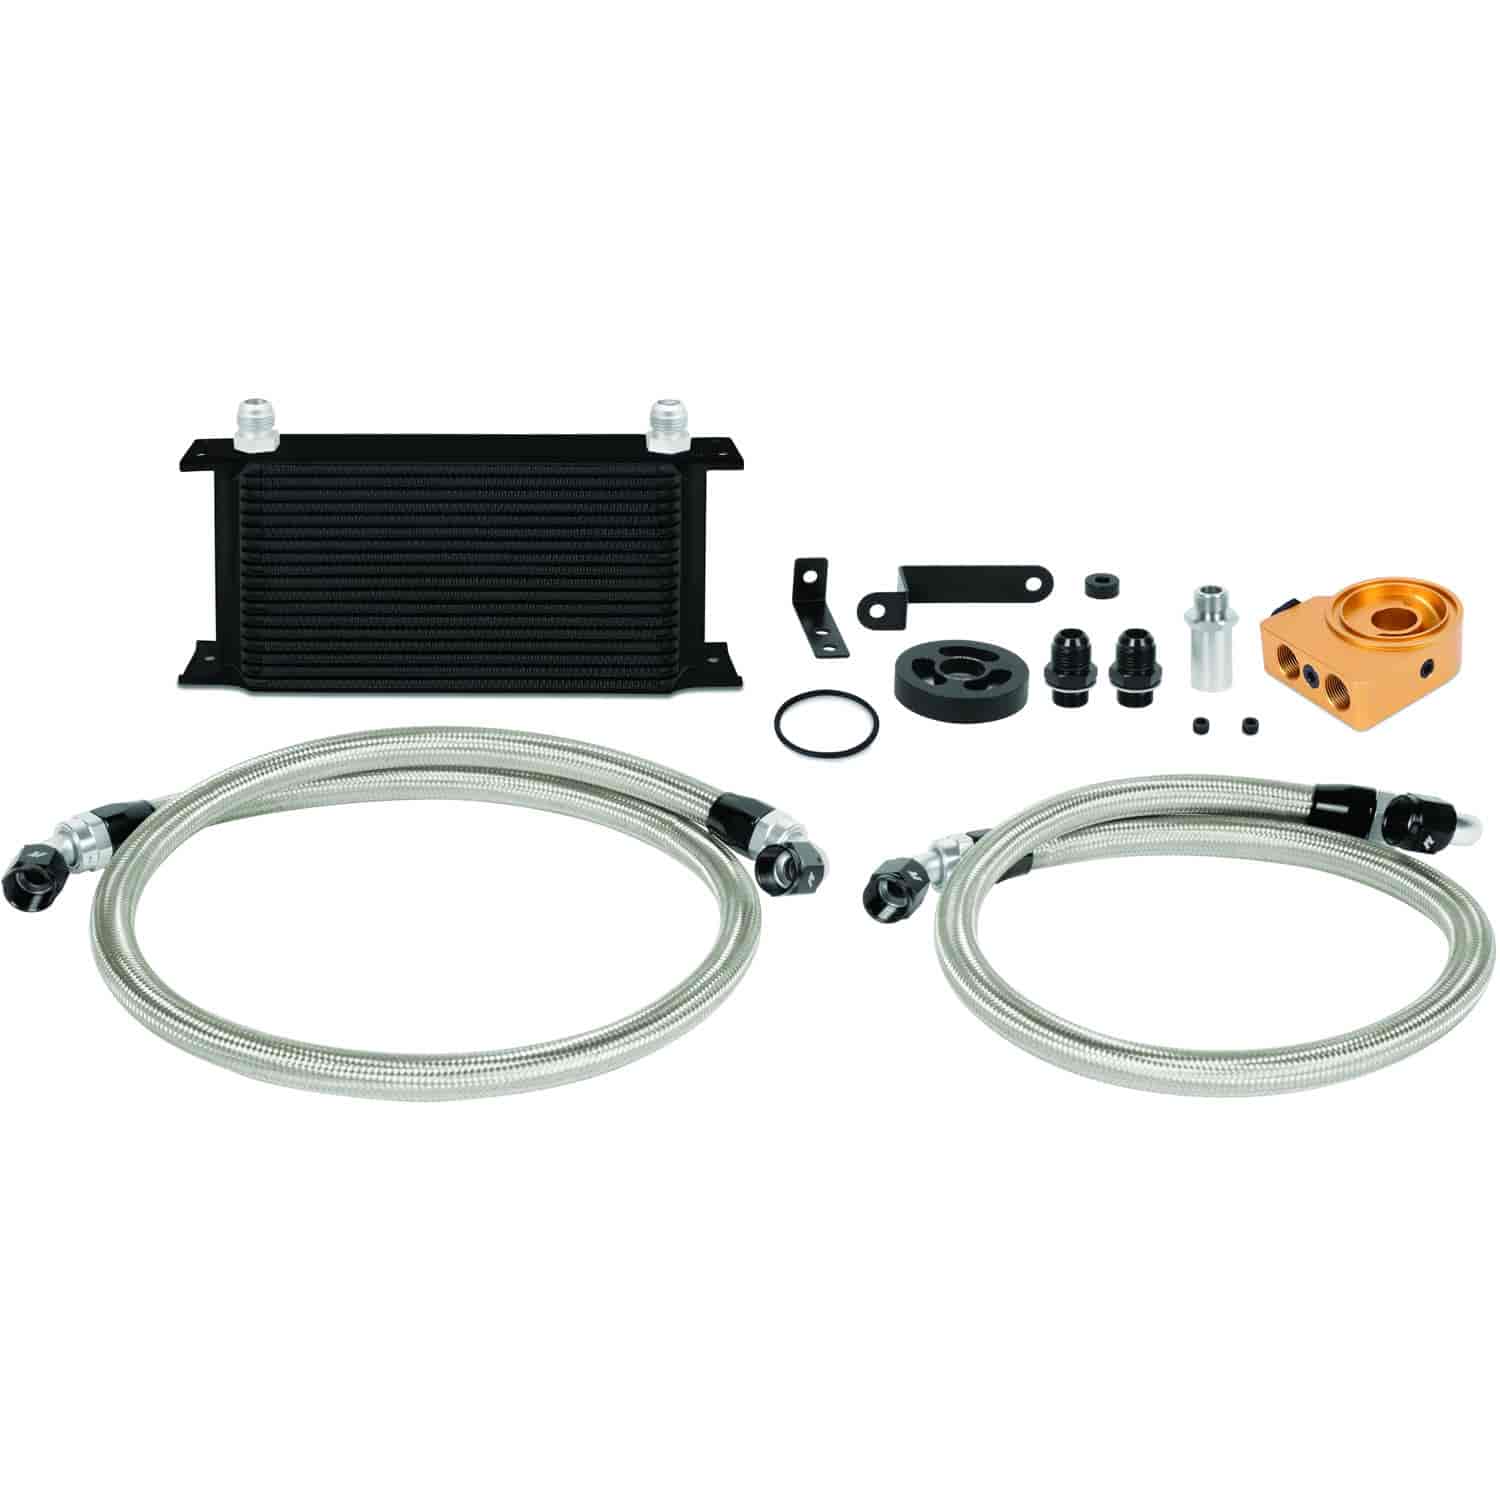 Subaru WRX Thermostatic Oil Cooler Kit Black -